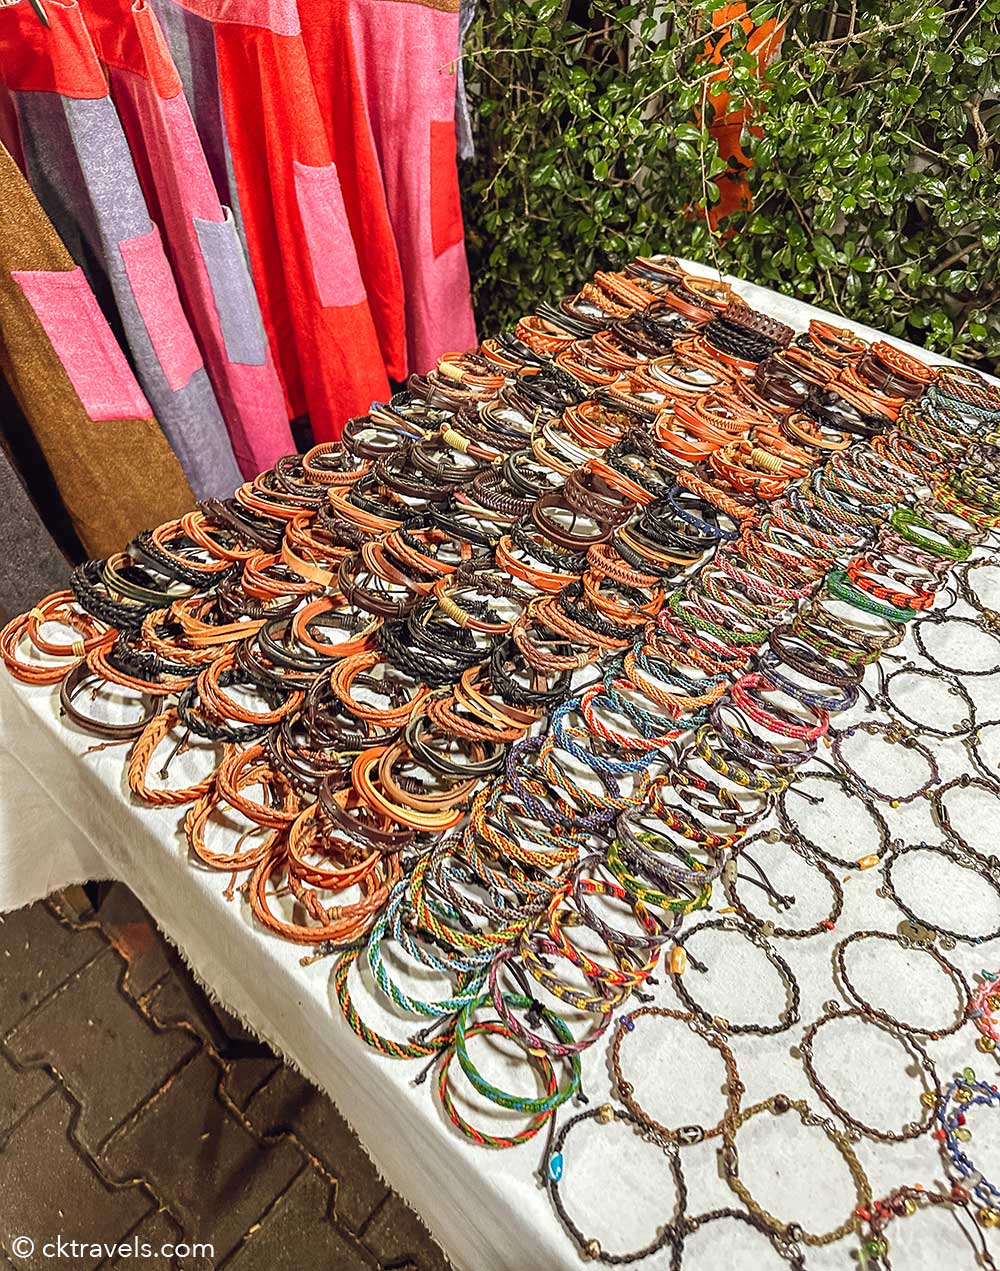 bracelet stall at Chiang Mai Friday Night Market (Kad Kongkao Walking Street)